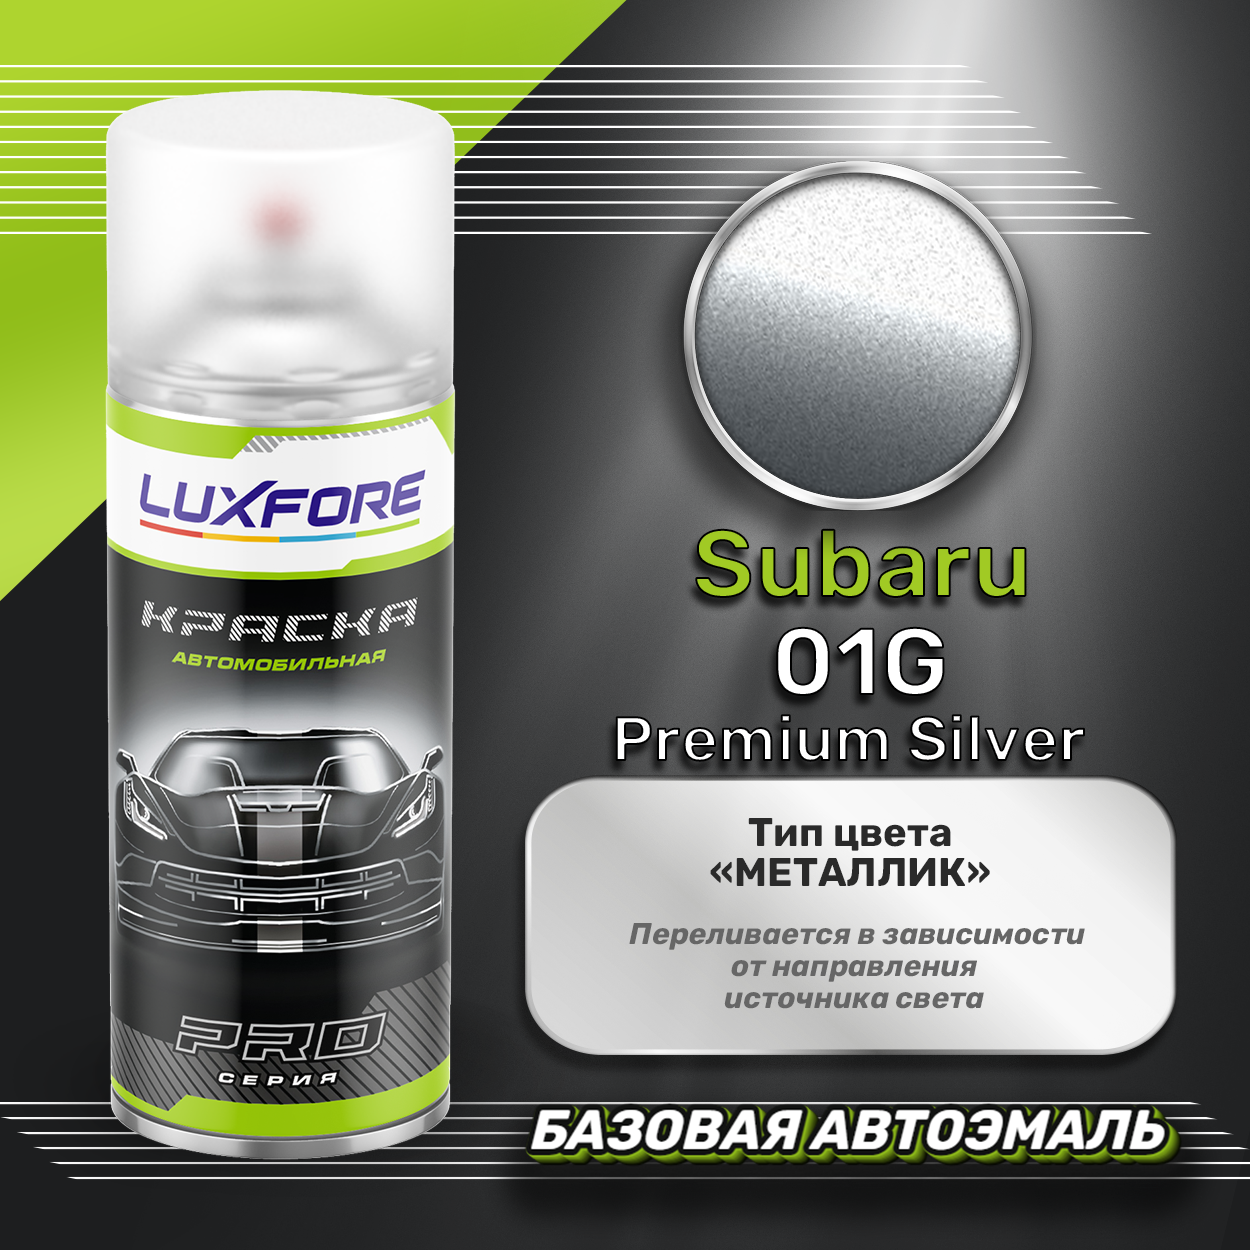 Luxfore аэрозольная краска Subaru 01G Premium Silver 400 мл